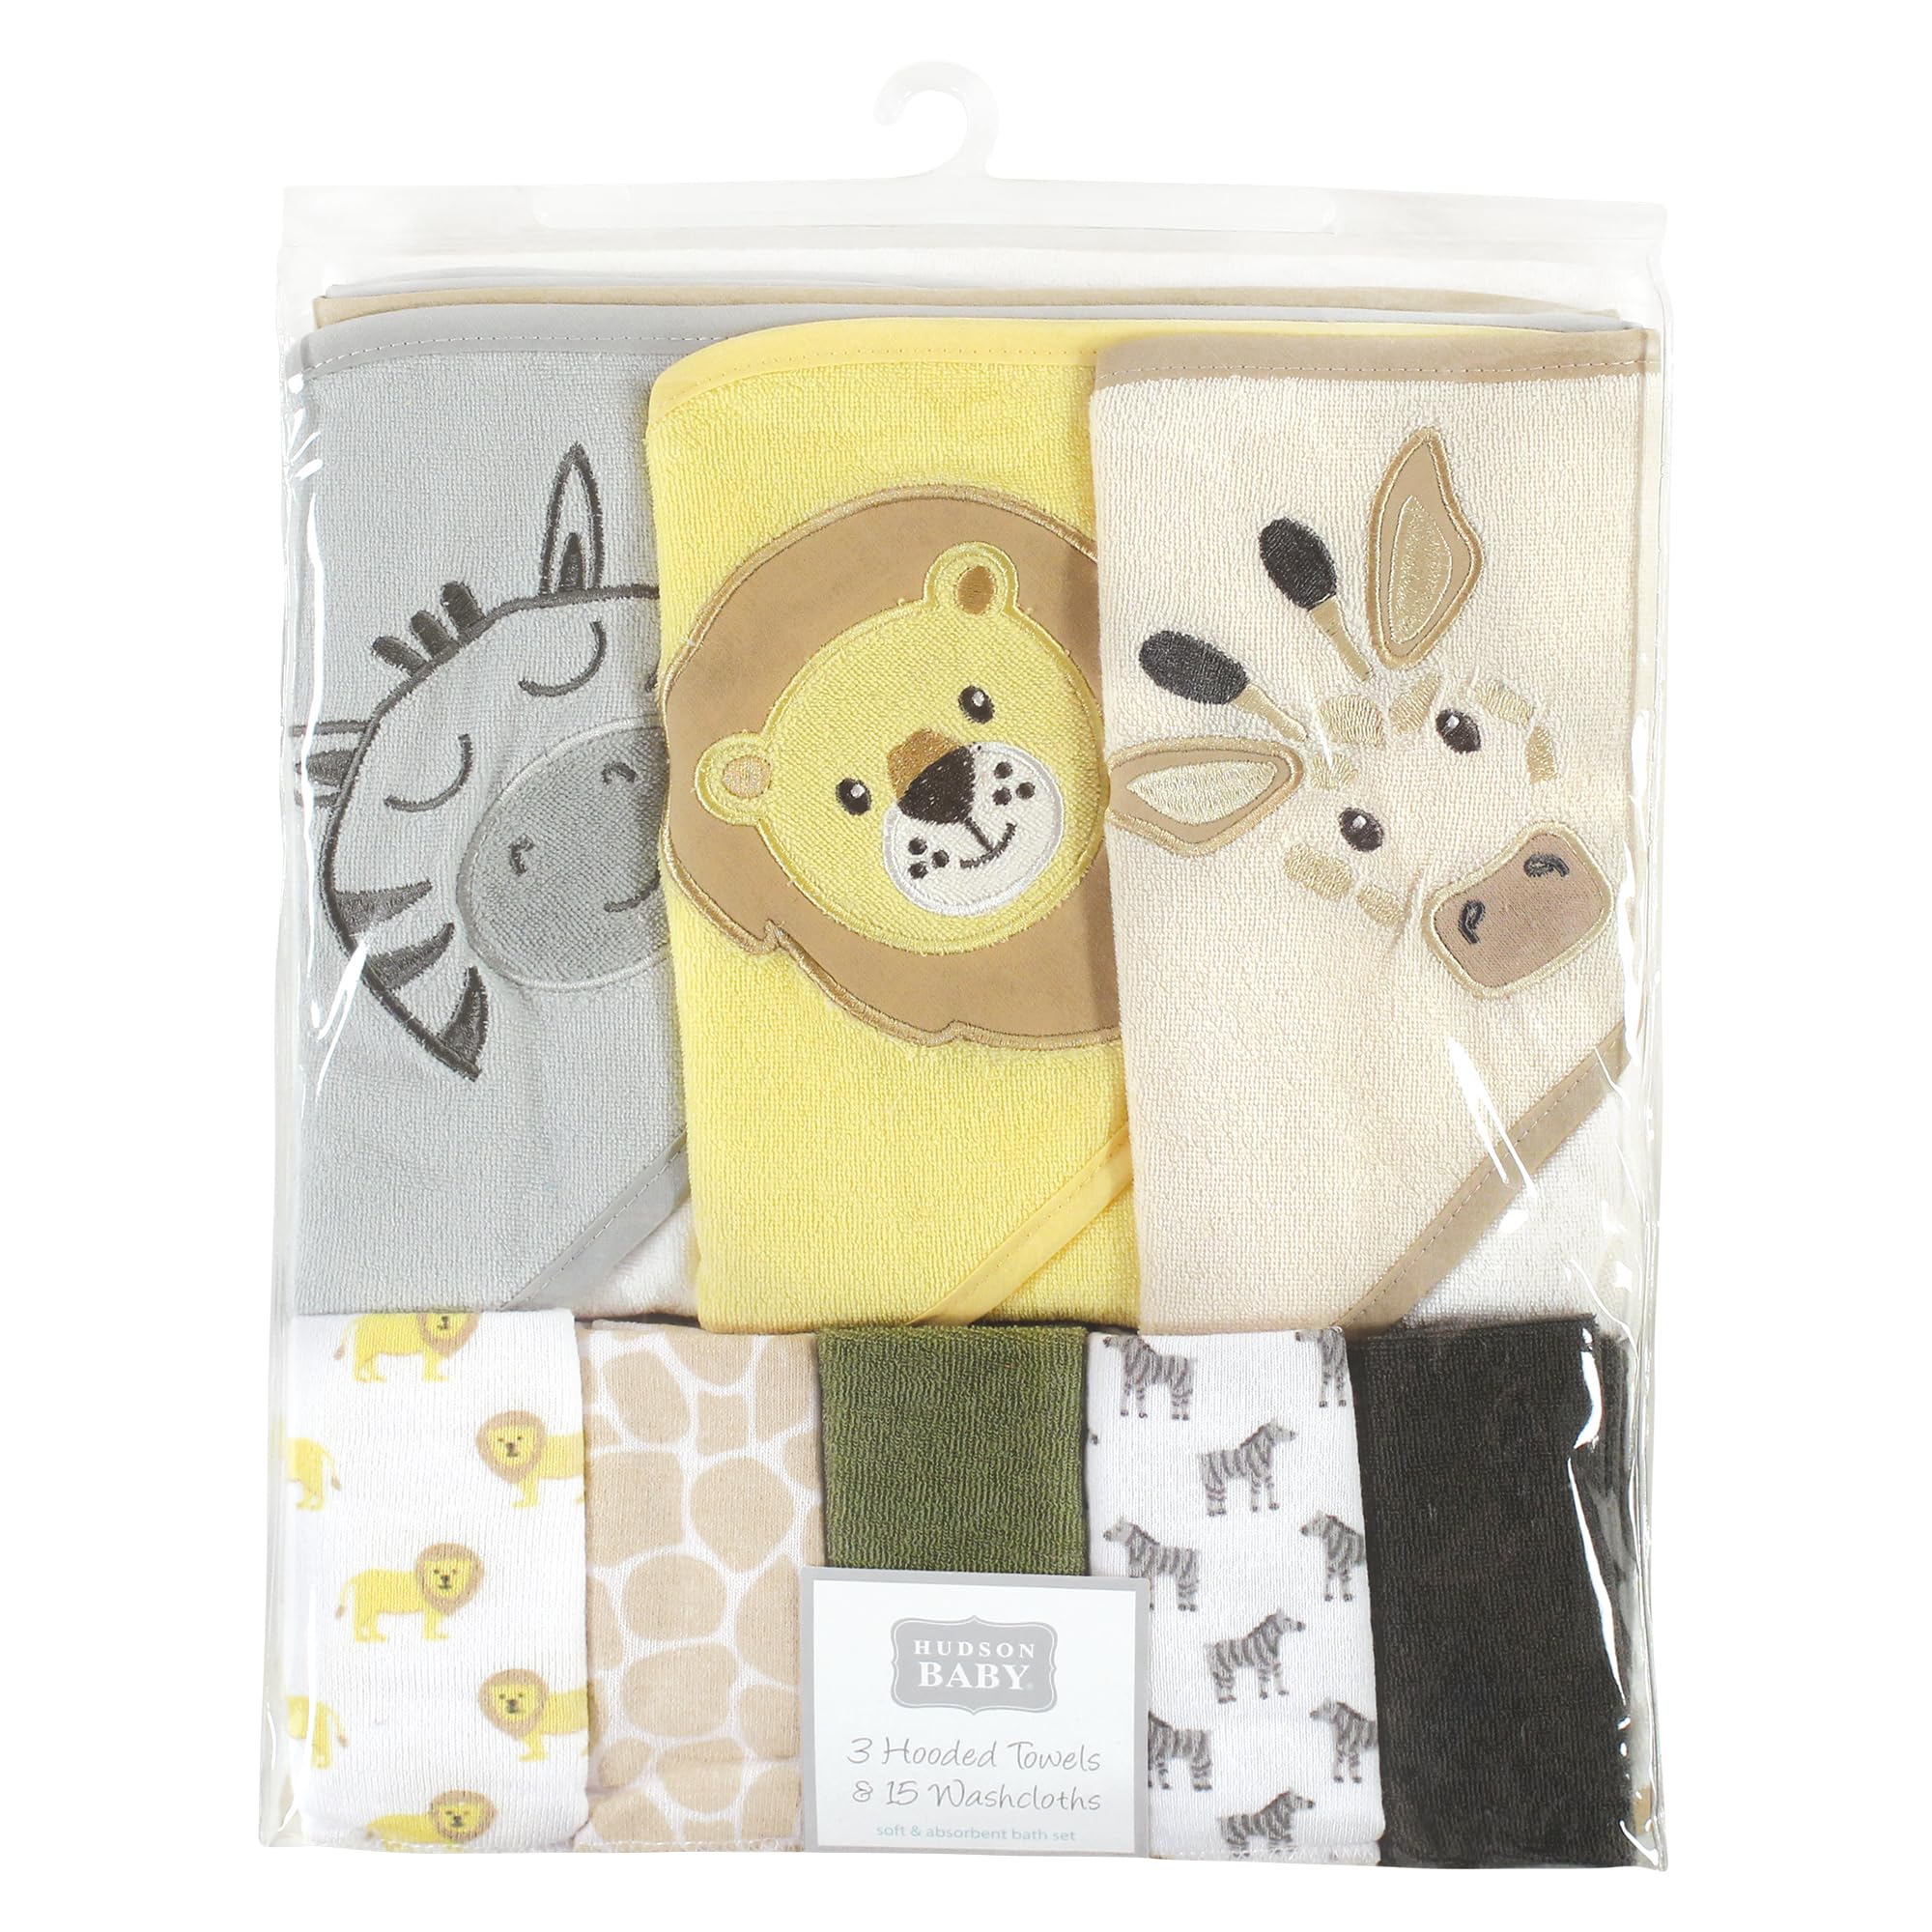 Hudson Baby Unisex Baby Animal Hooded Towel 3pk and 15 Washcloths, Safari, One Size